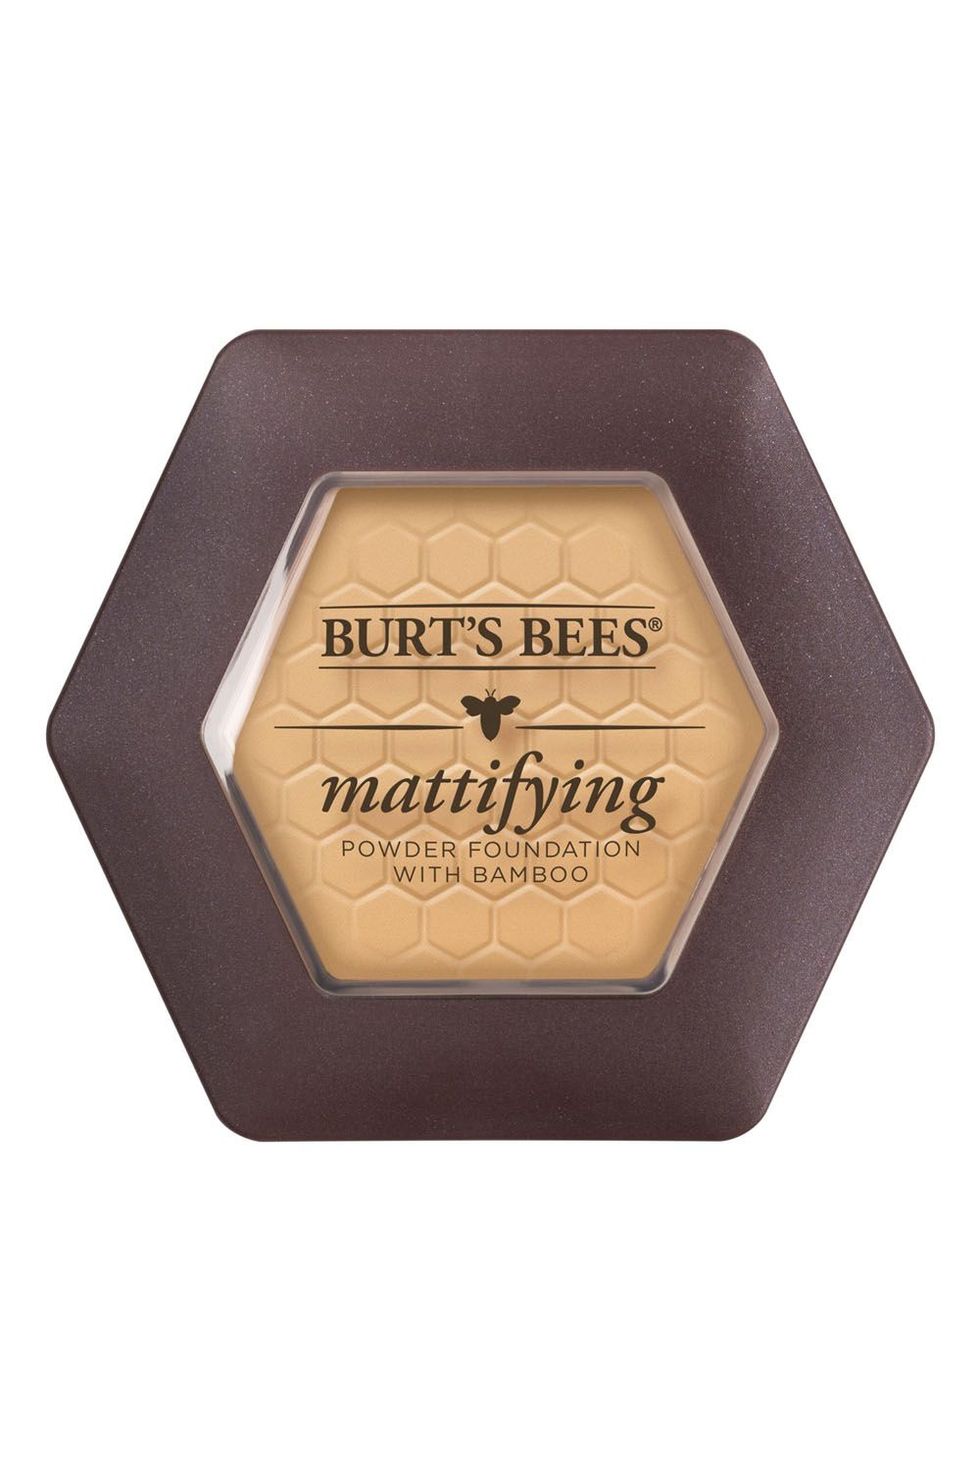 Burt’s Bees Mattifying Powder Foundation